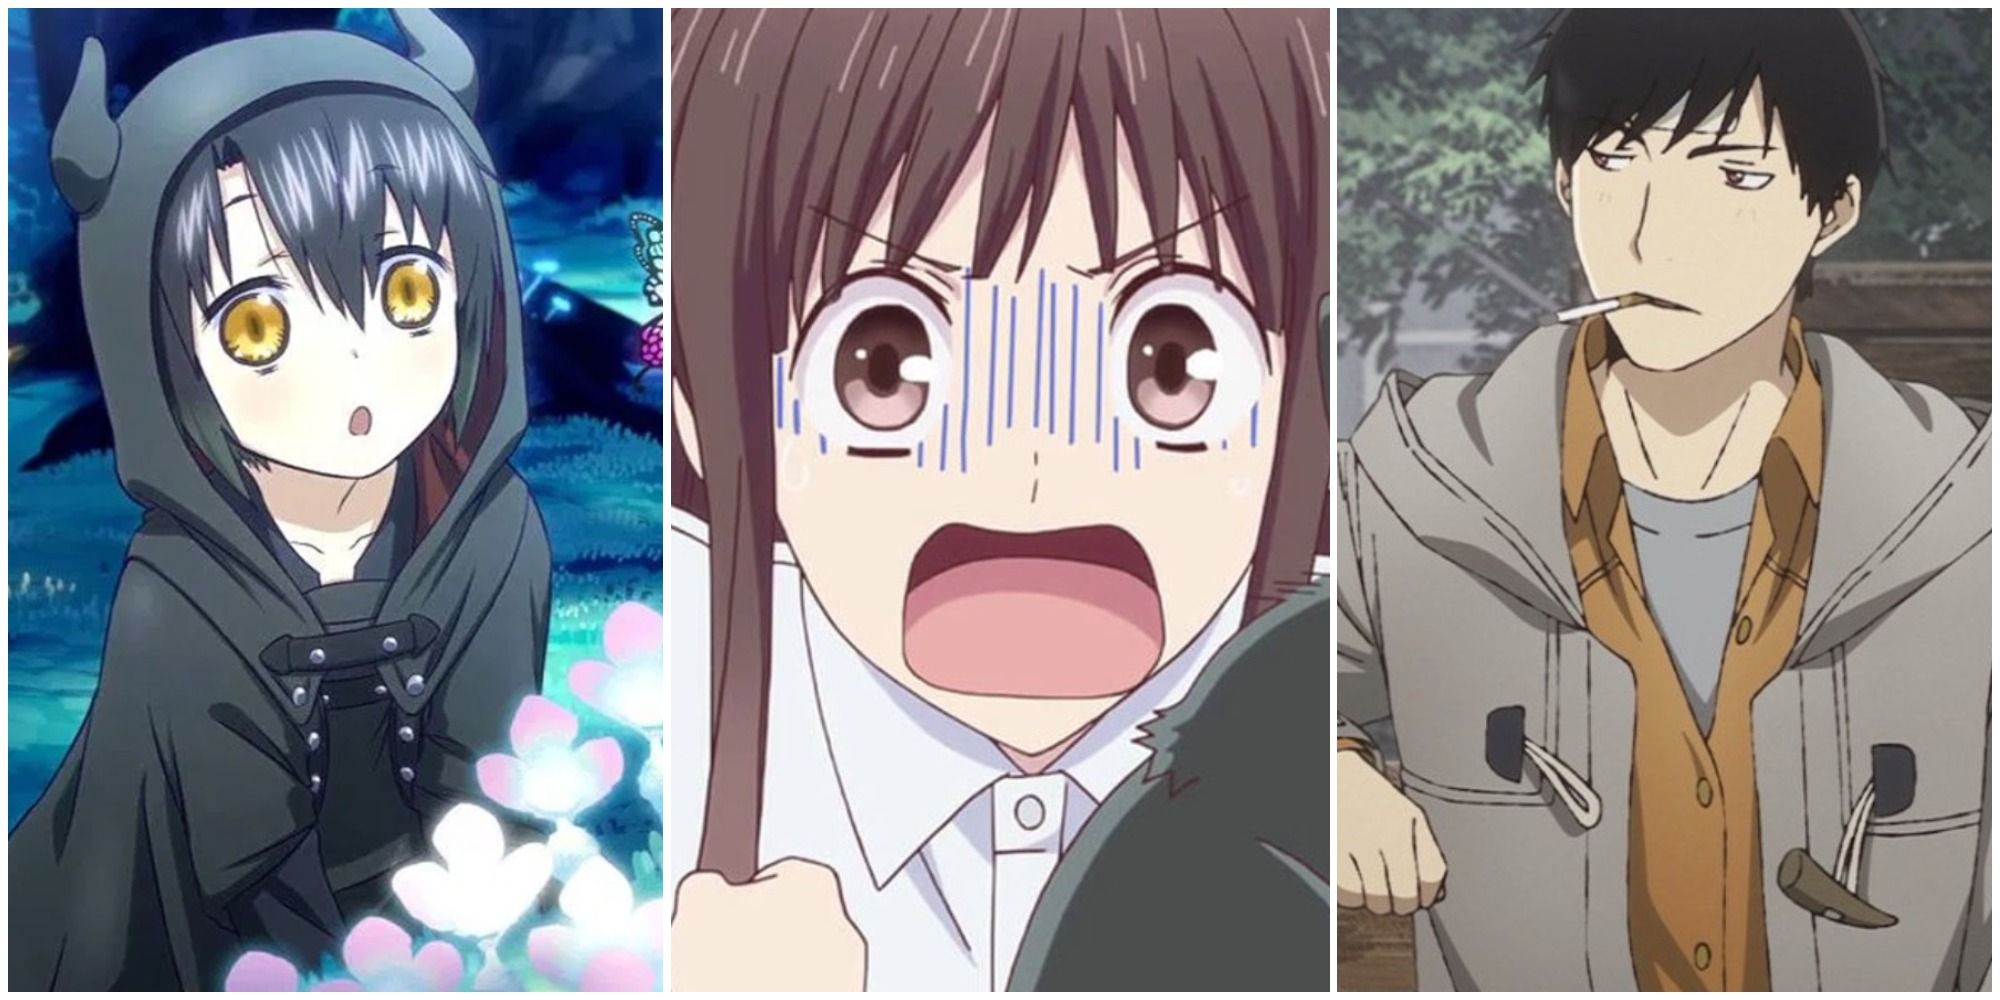 Crunchyroll Announces Nominees for 5th Annual Anime Awards  Interest   Anime News Network